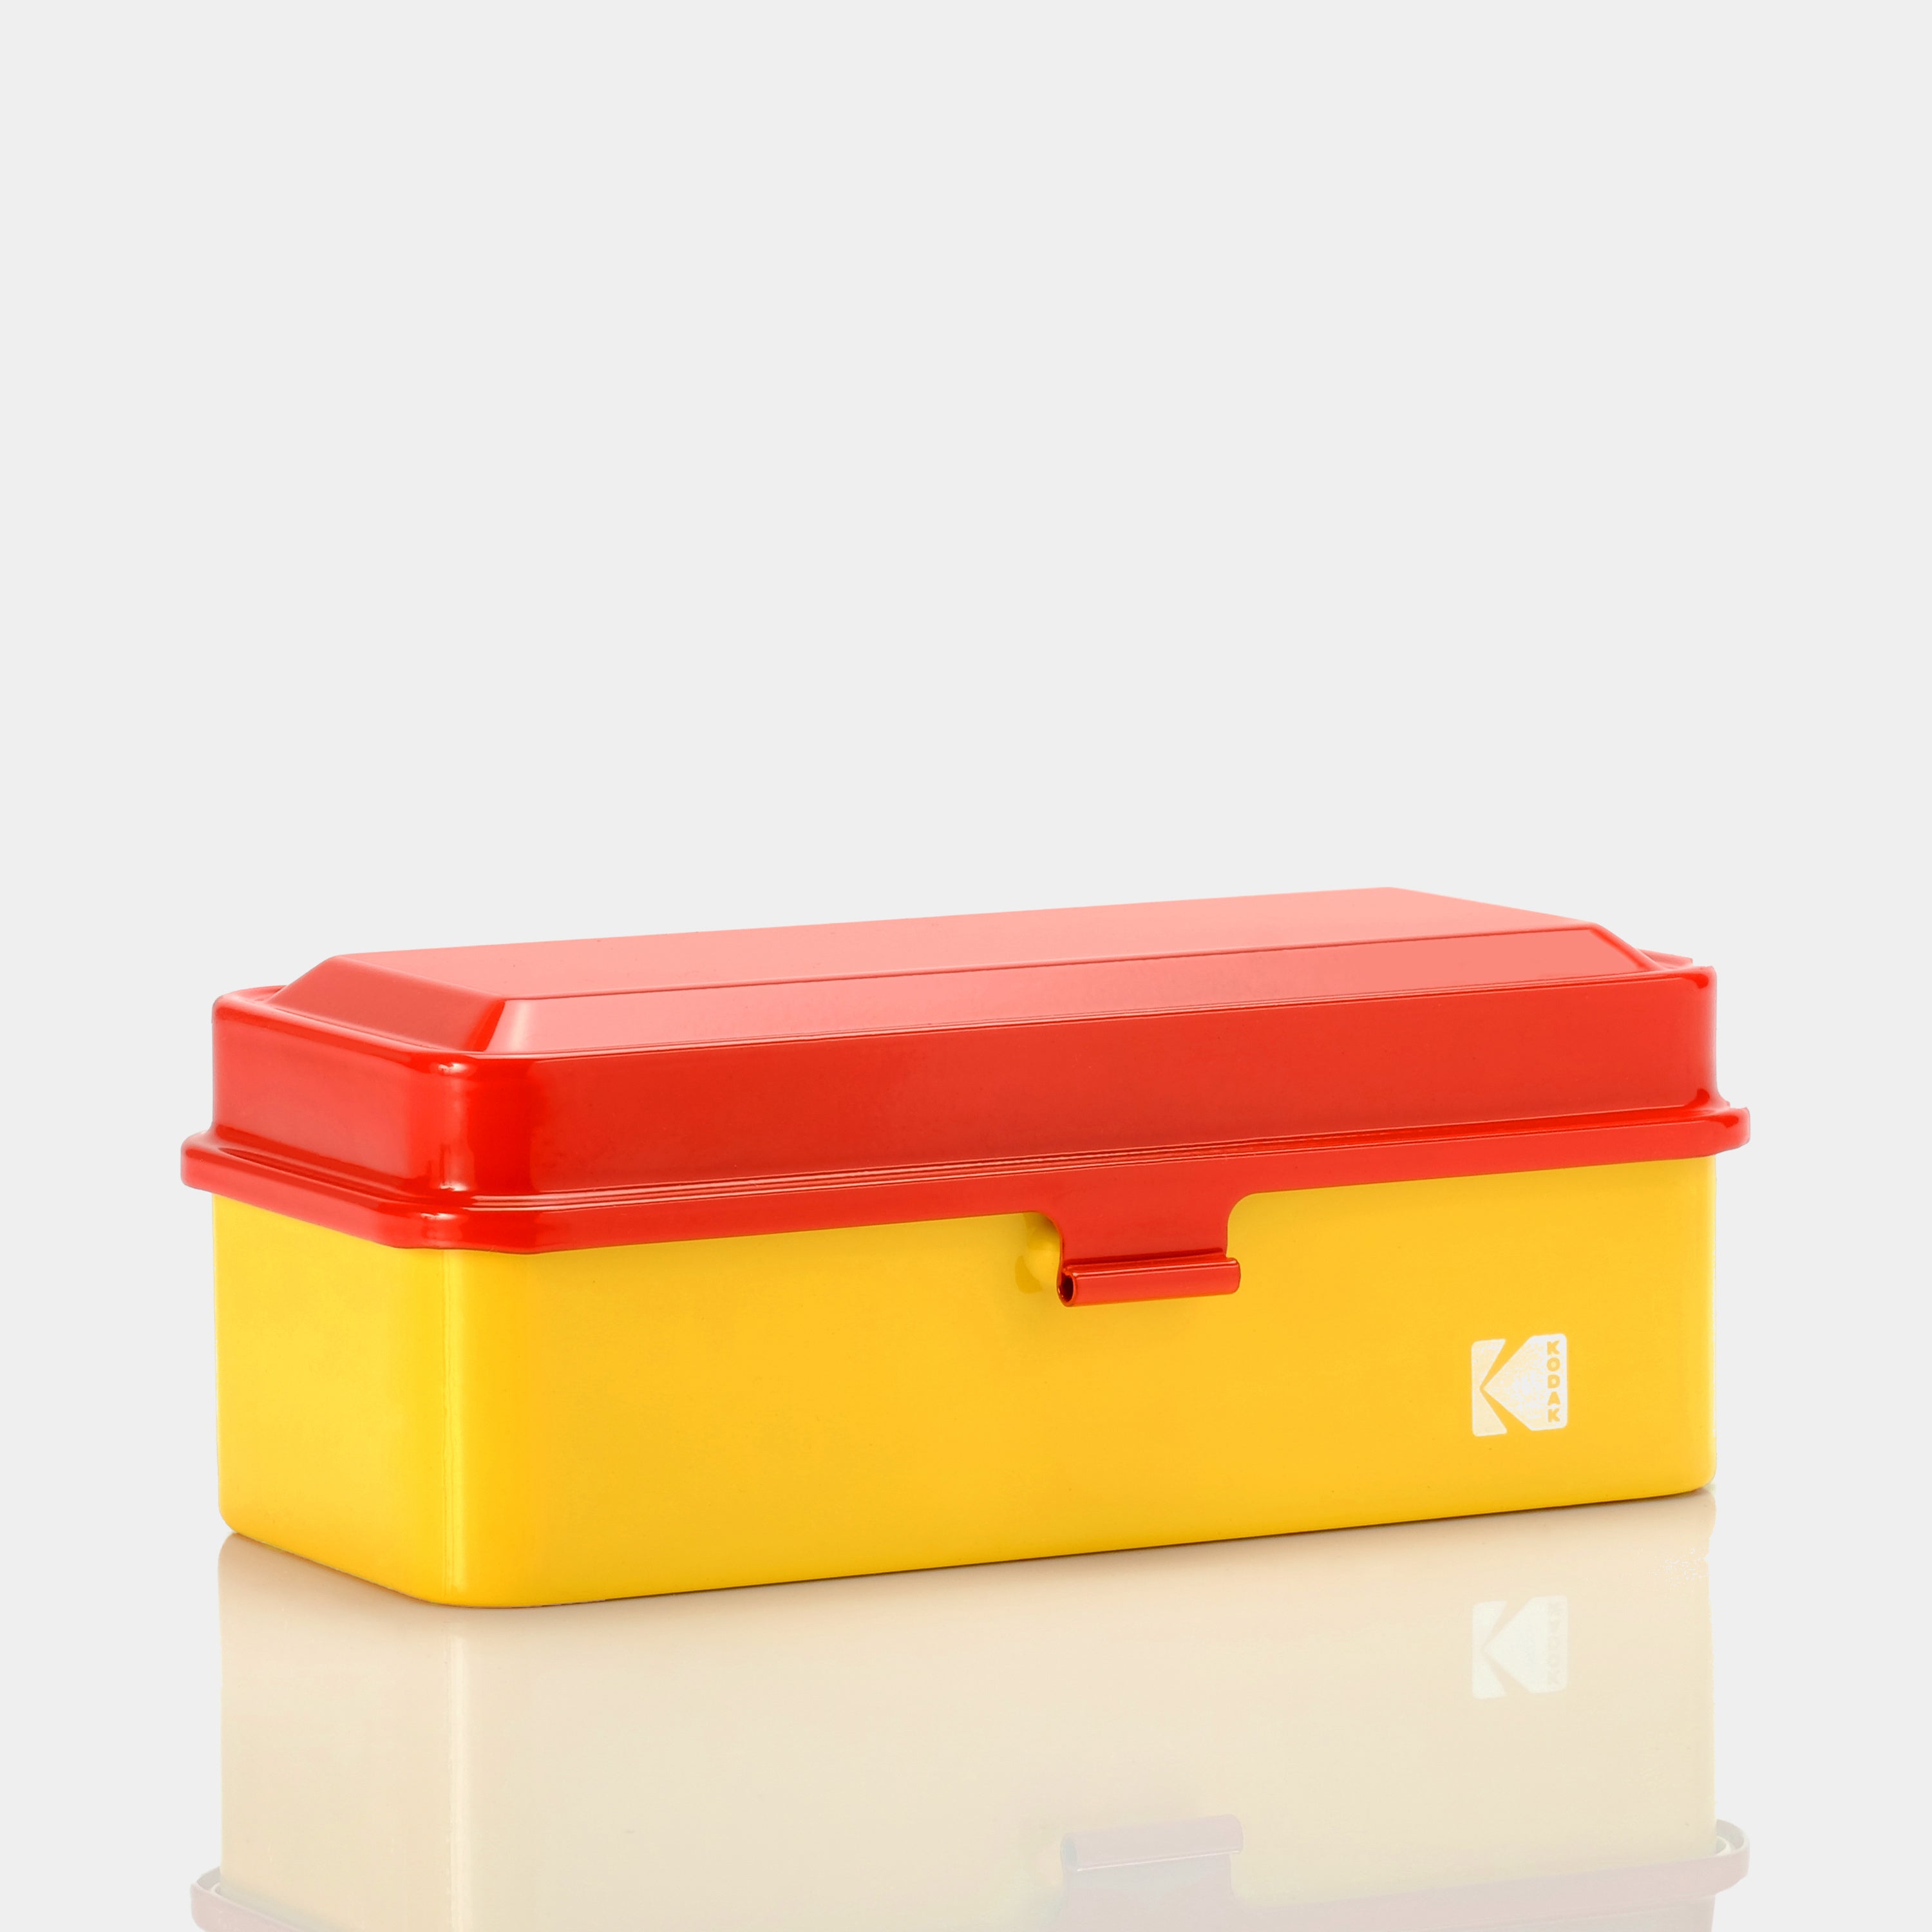 Kodak Yellow and Red Classic 120/35mm Film Storage Case